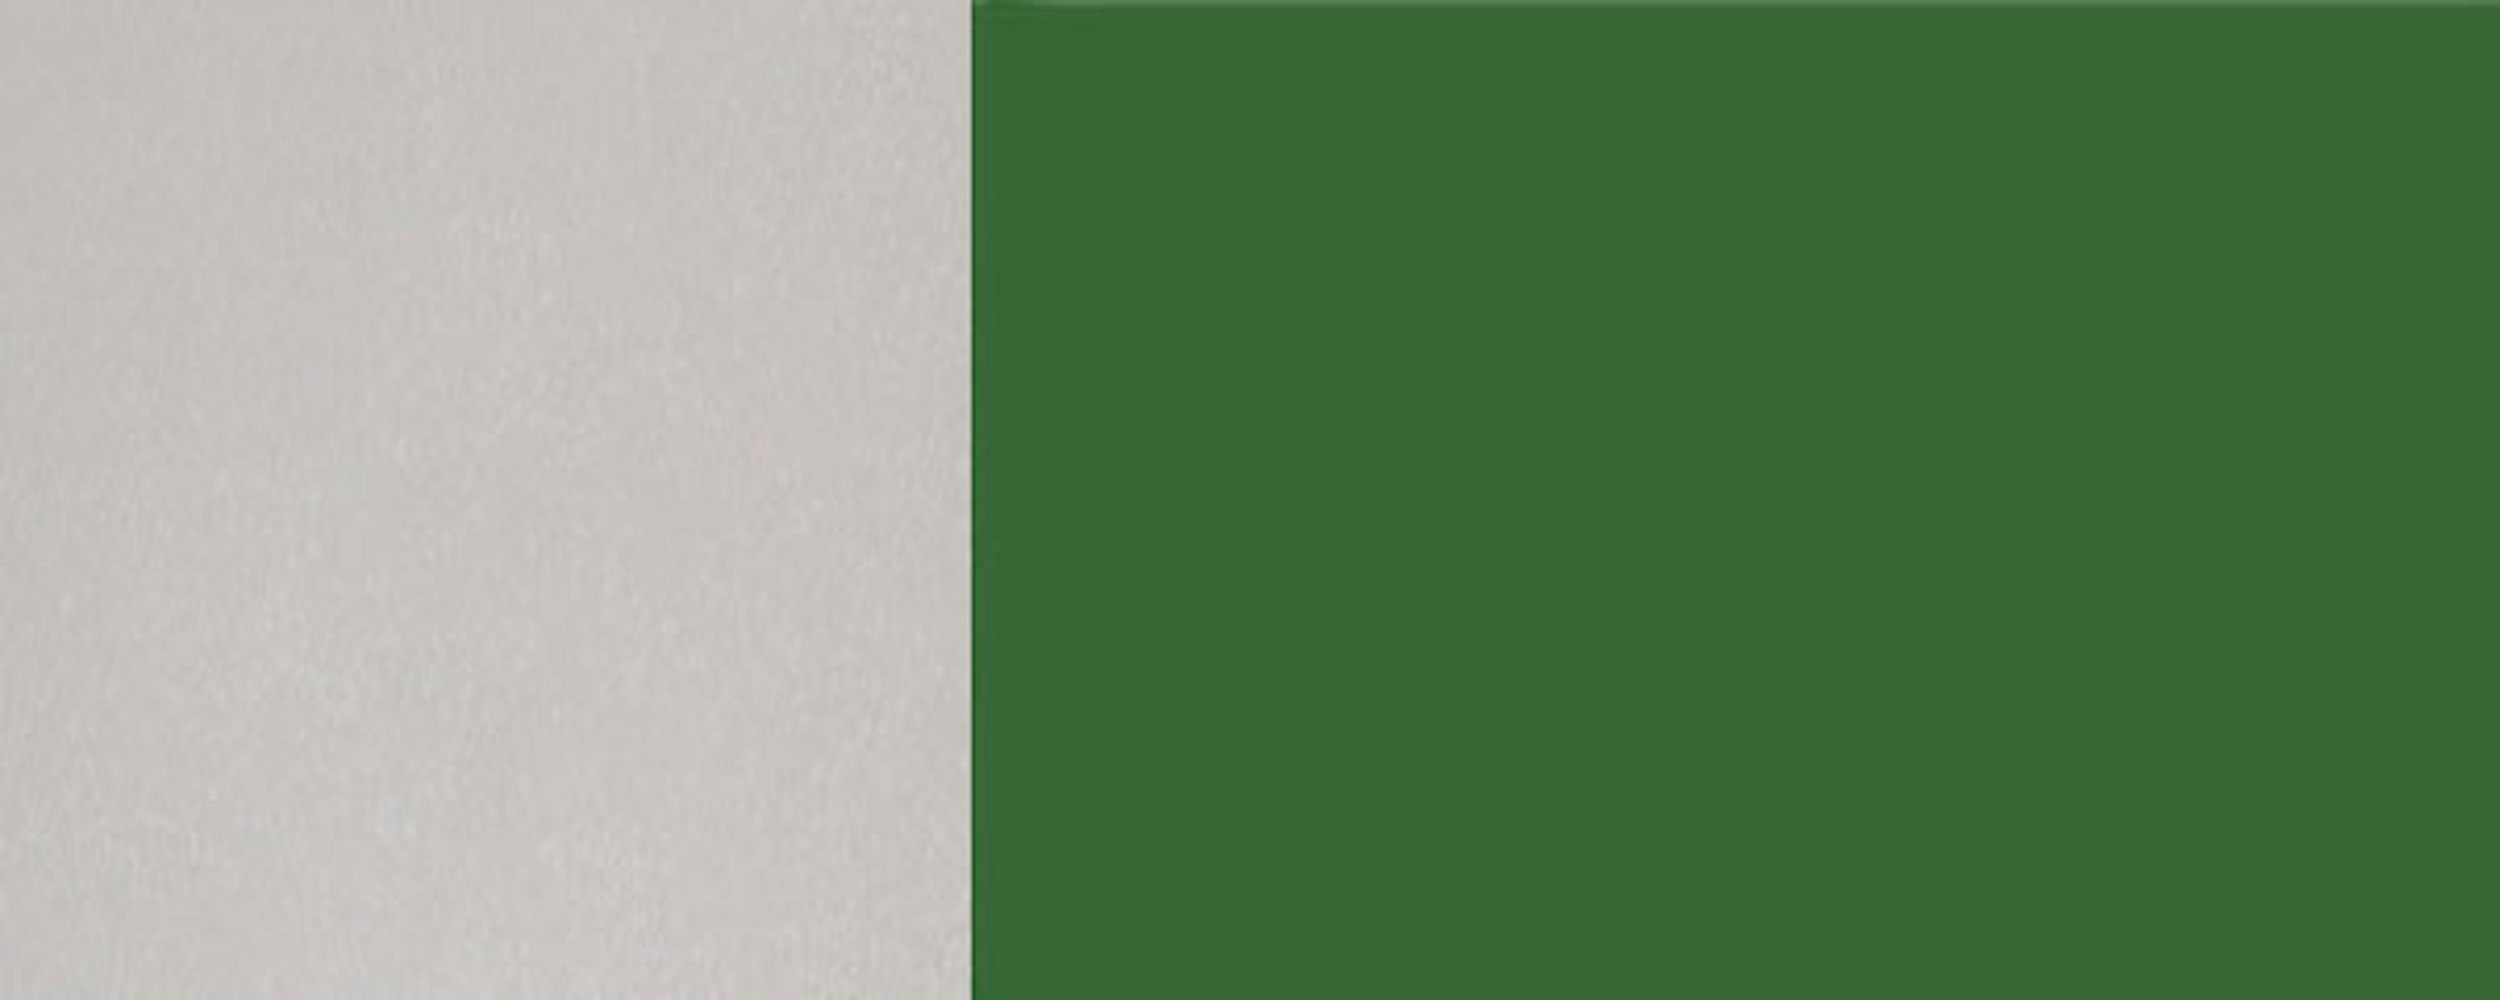 6001 Ausführung grifflos Glashängeschrank Front-, Feldmann-Wohnen 1-türig Florence und Hochglanz RAL Korpusfarbe smaragdgrün (Florence) 45cm wählbar